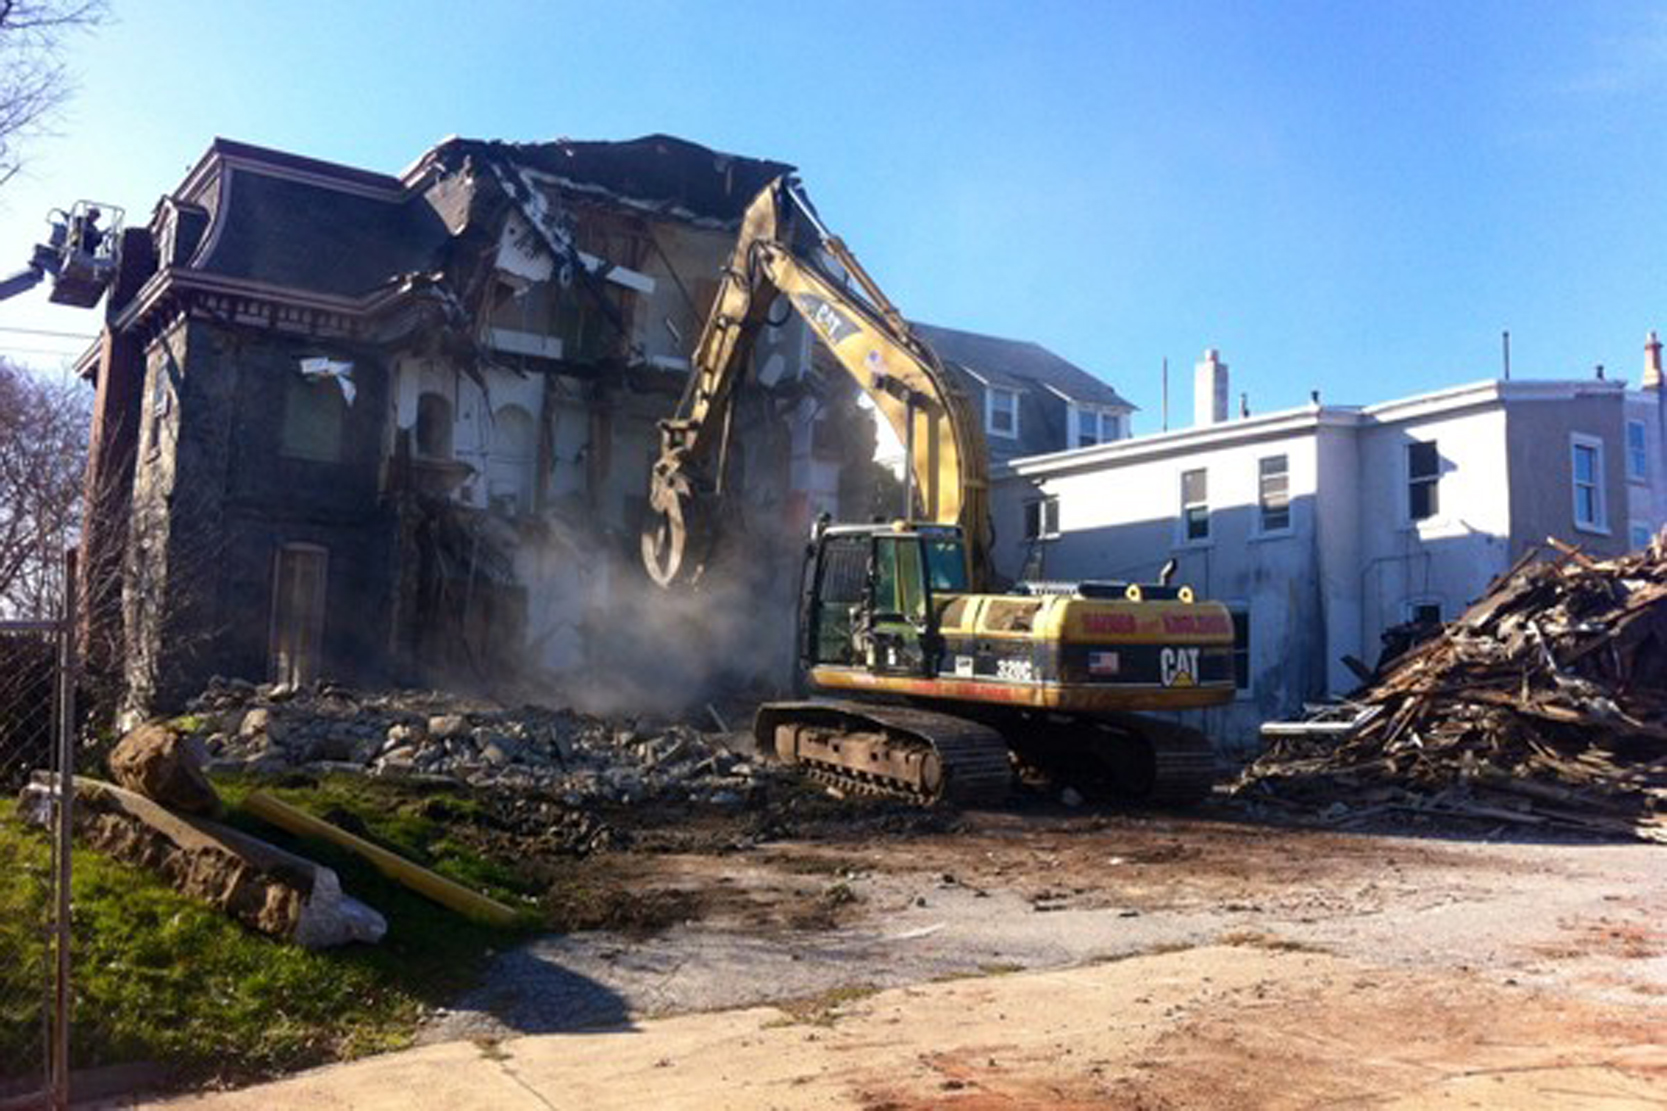 Bunting House Demolition, December 2012